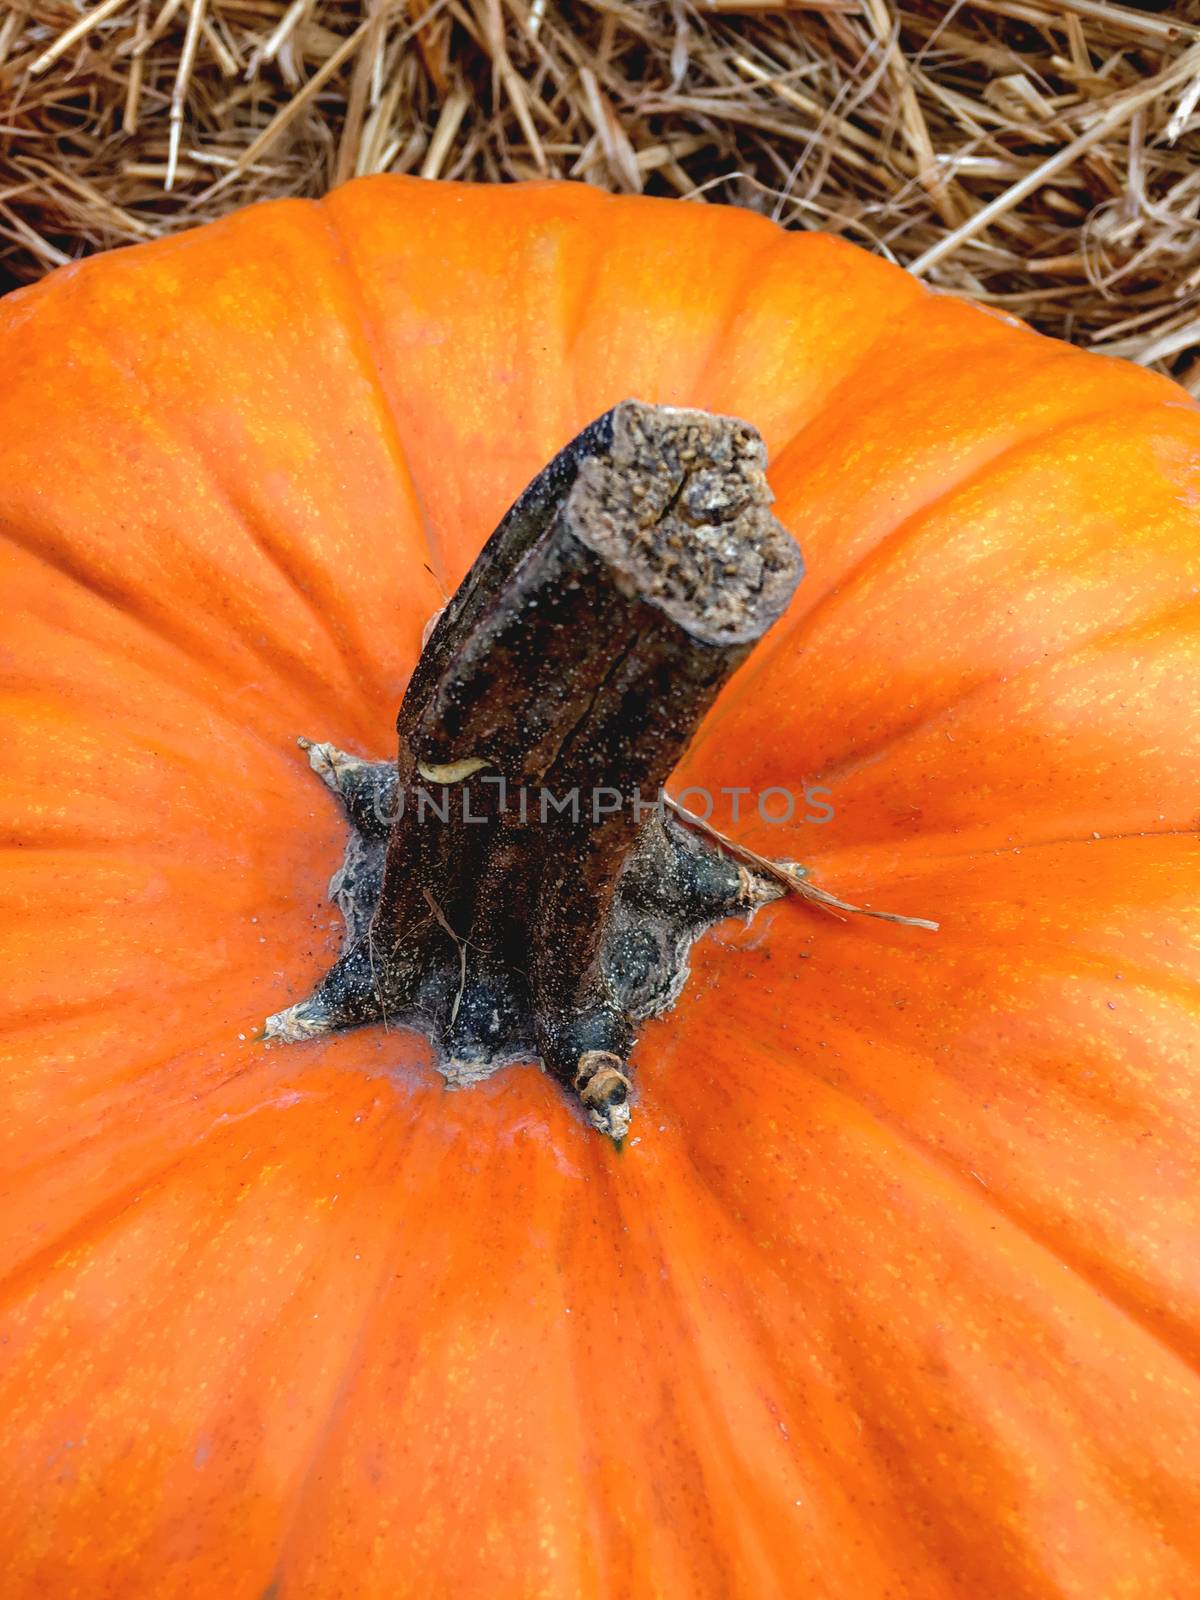 Bright orange pumpkin on straw. Autumn crop. Fall season backgro by aksenovko